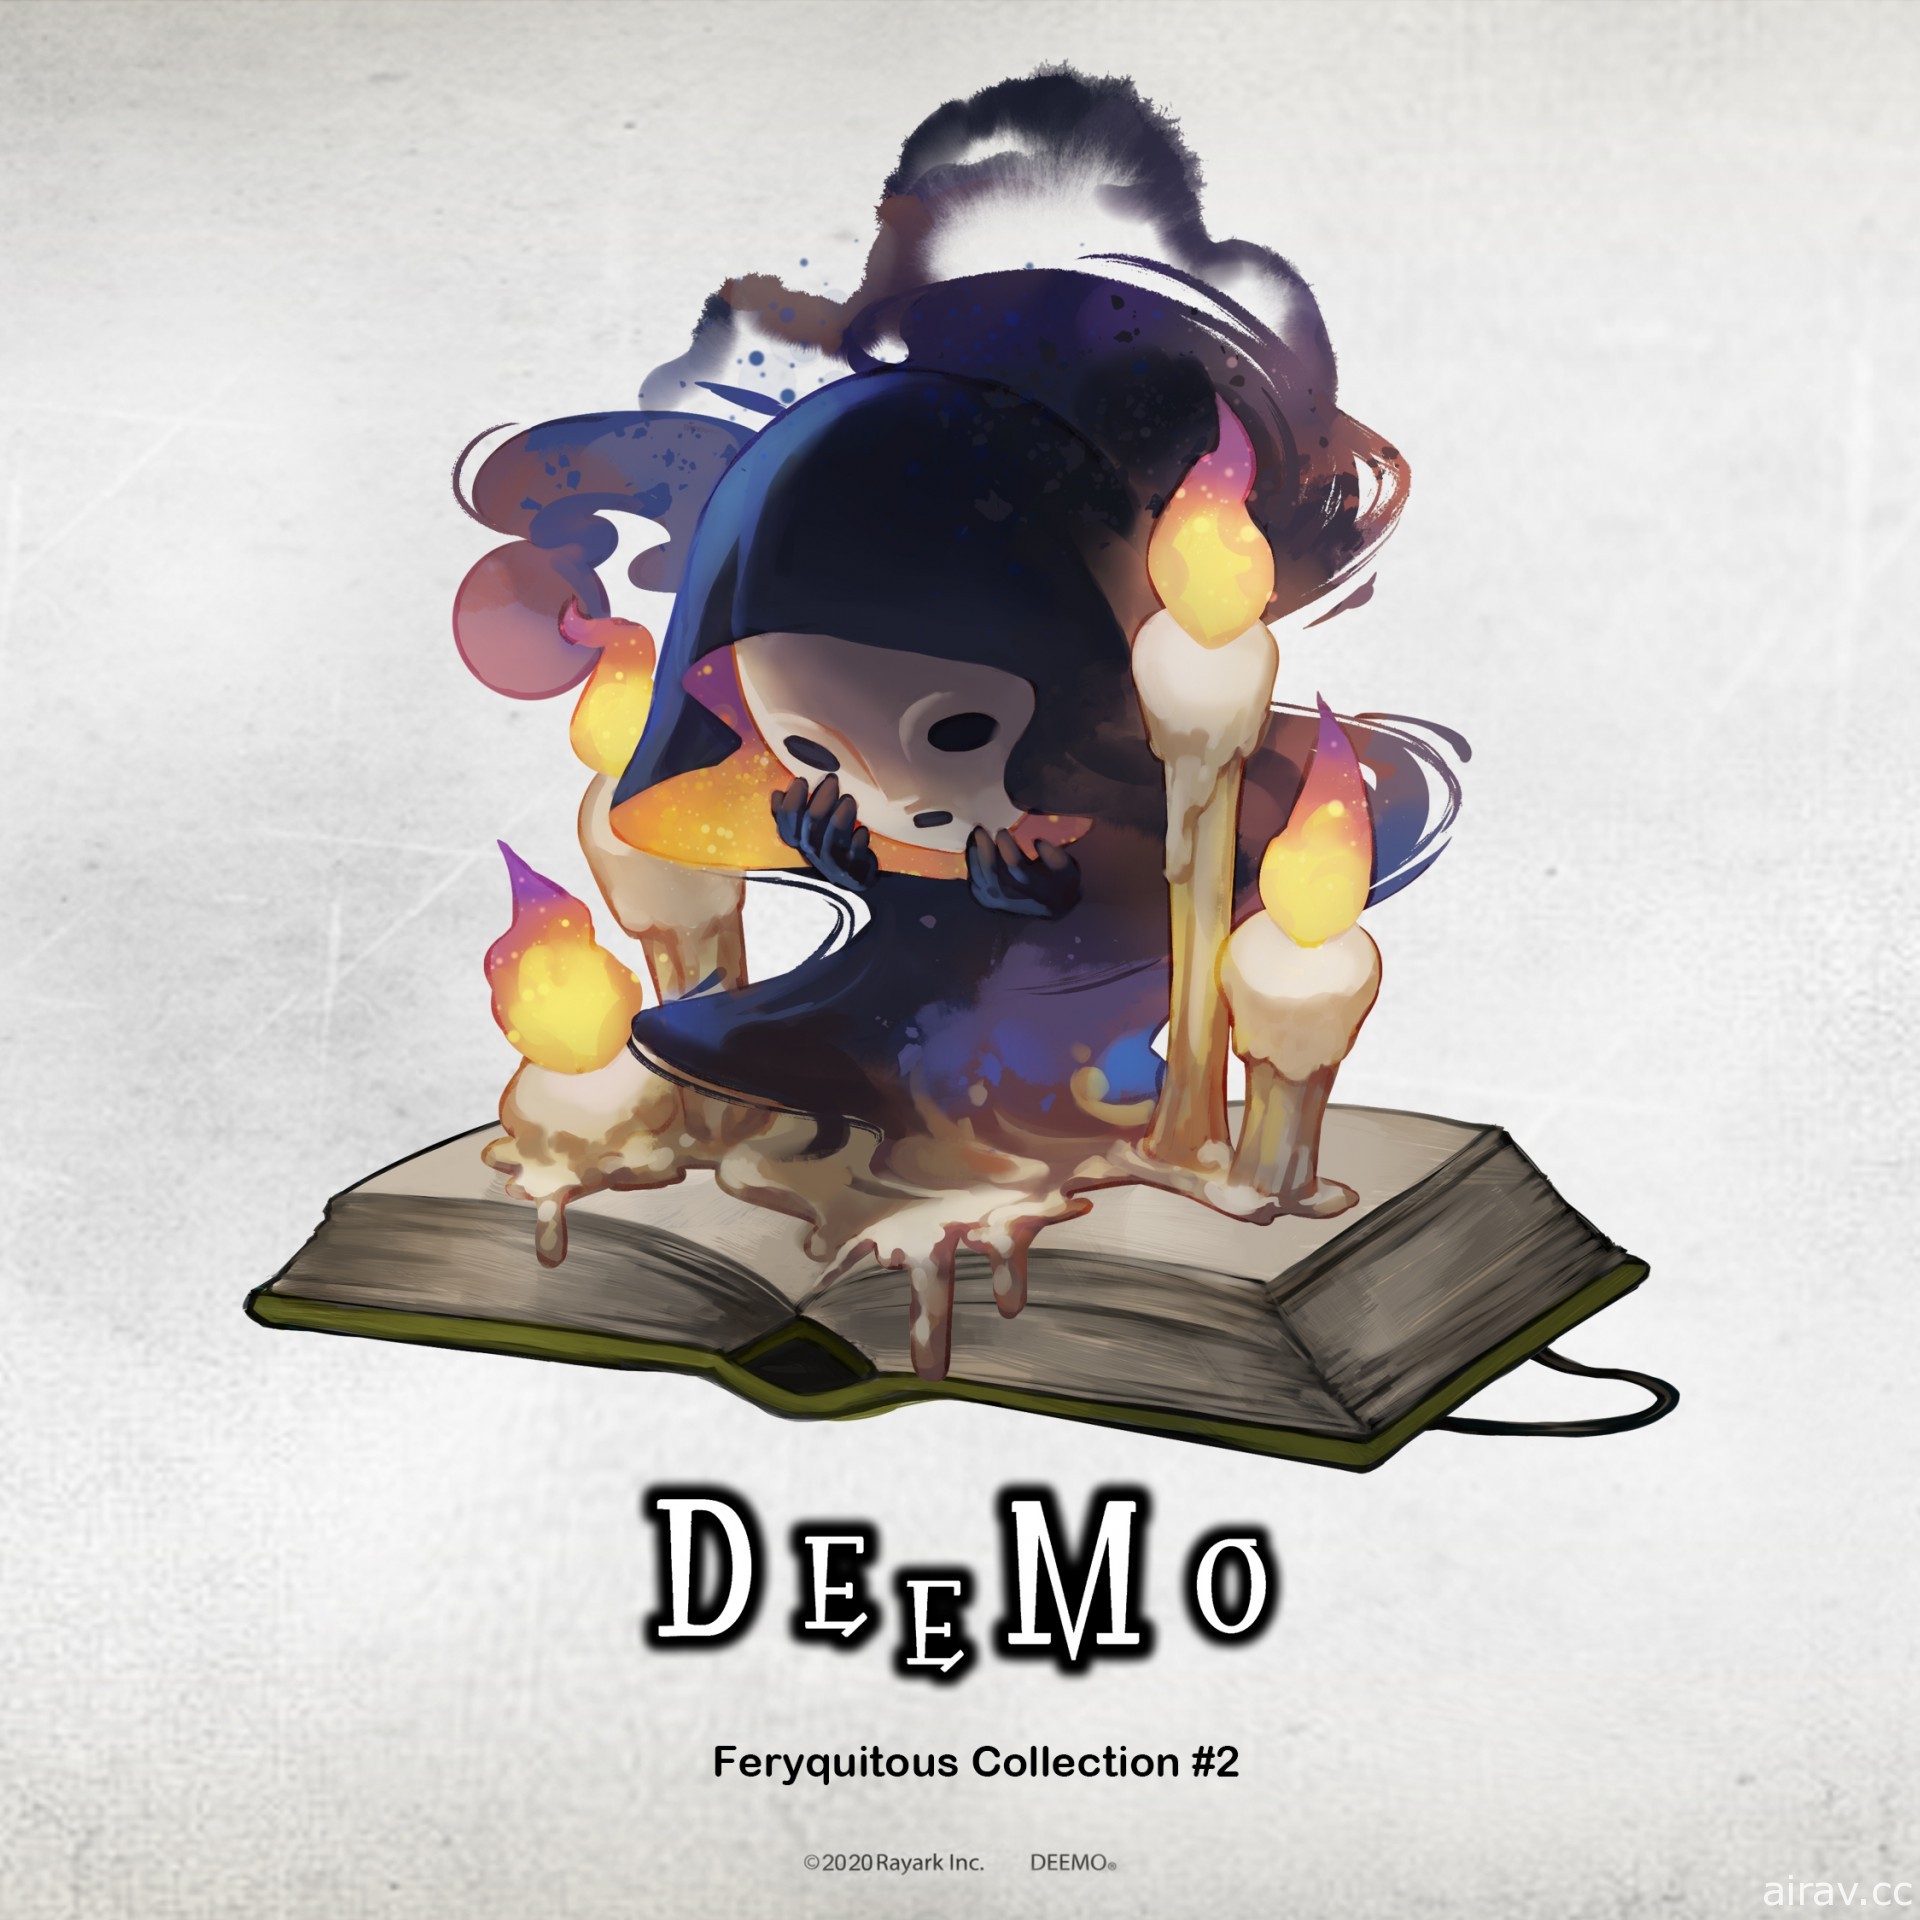 《DEEMO》3.8 版更新 推出《Cytus II》与《DEEMO -Reborn- 》合作曲包